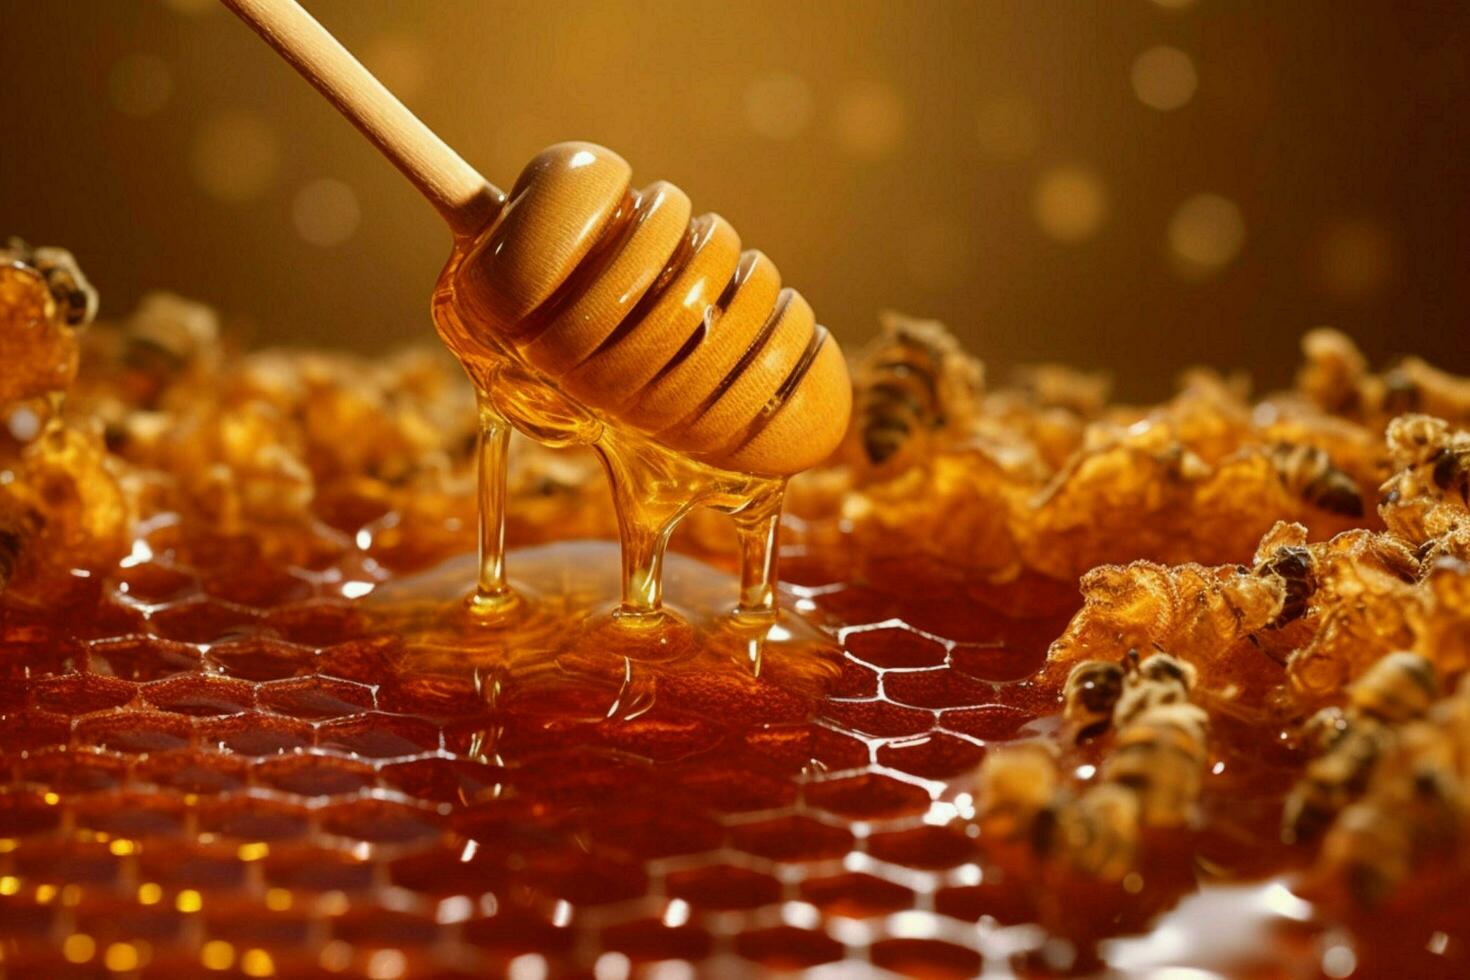 honey image hd photo